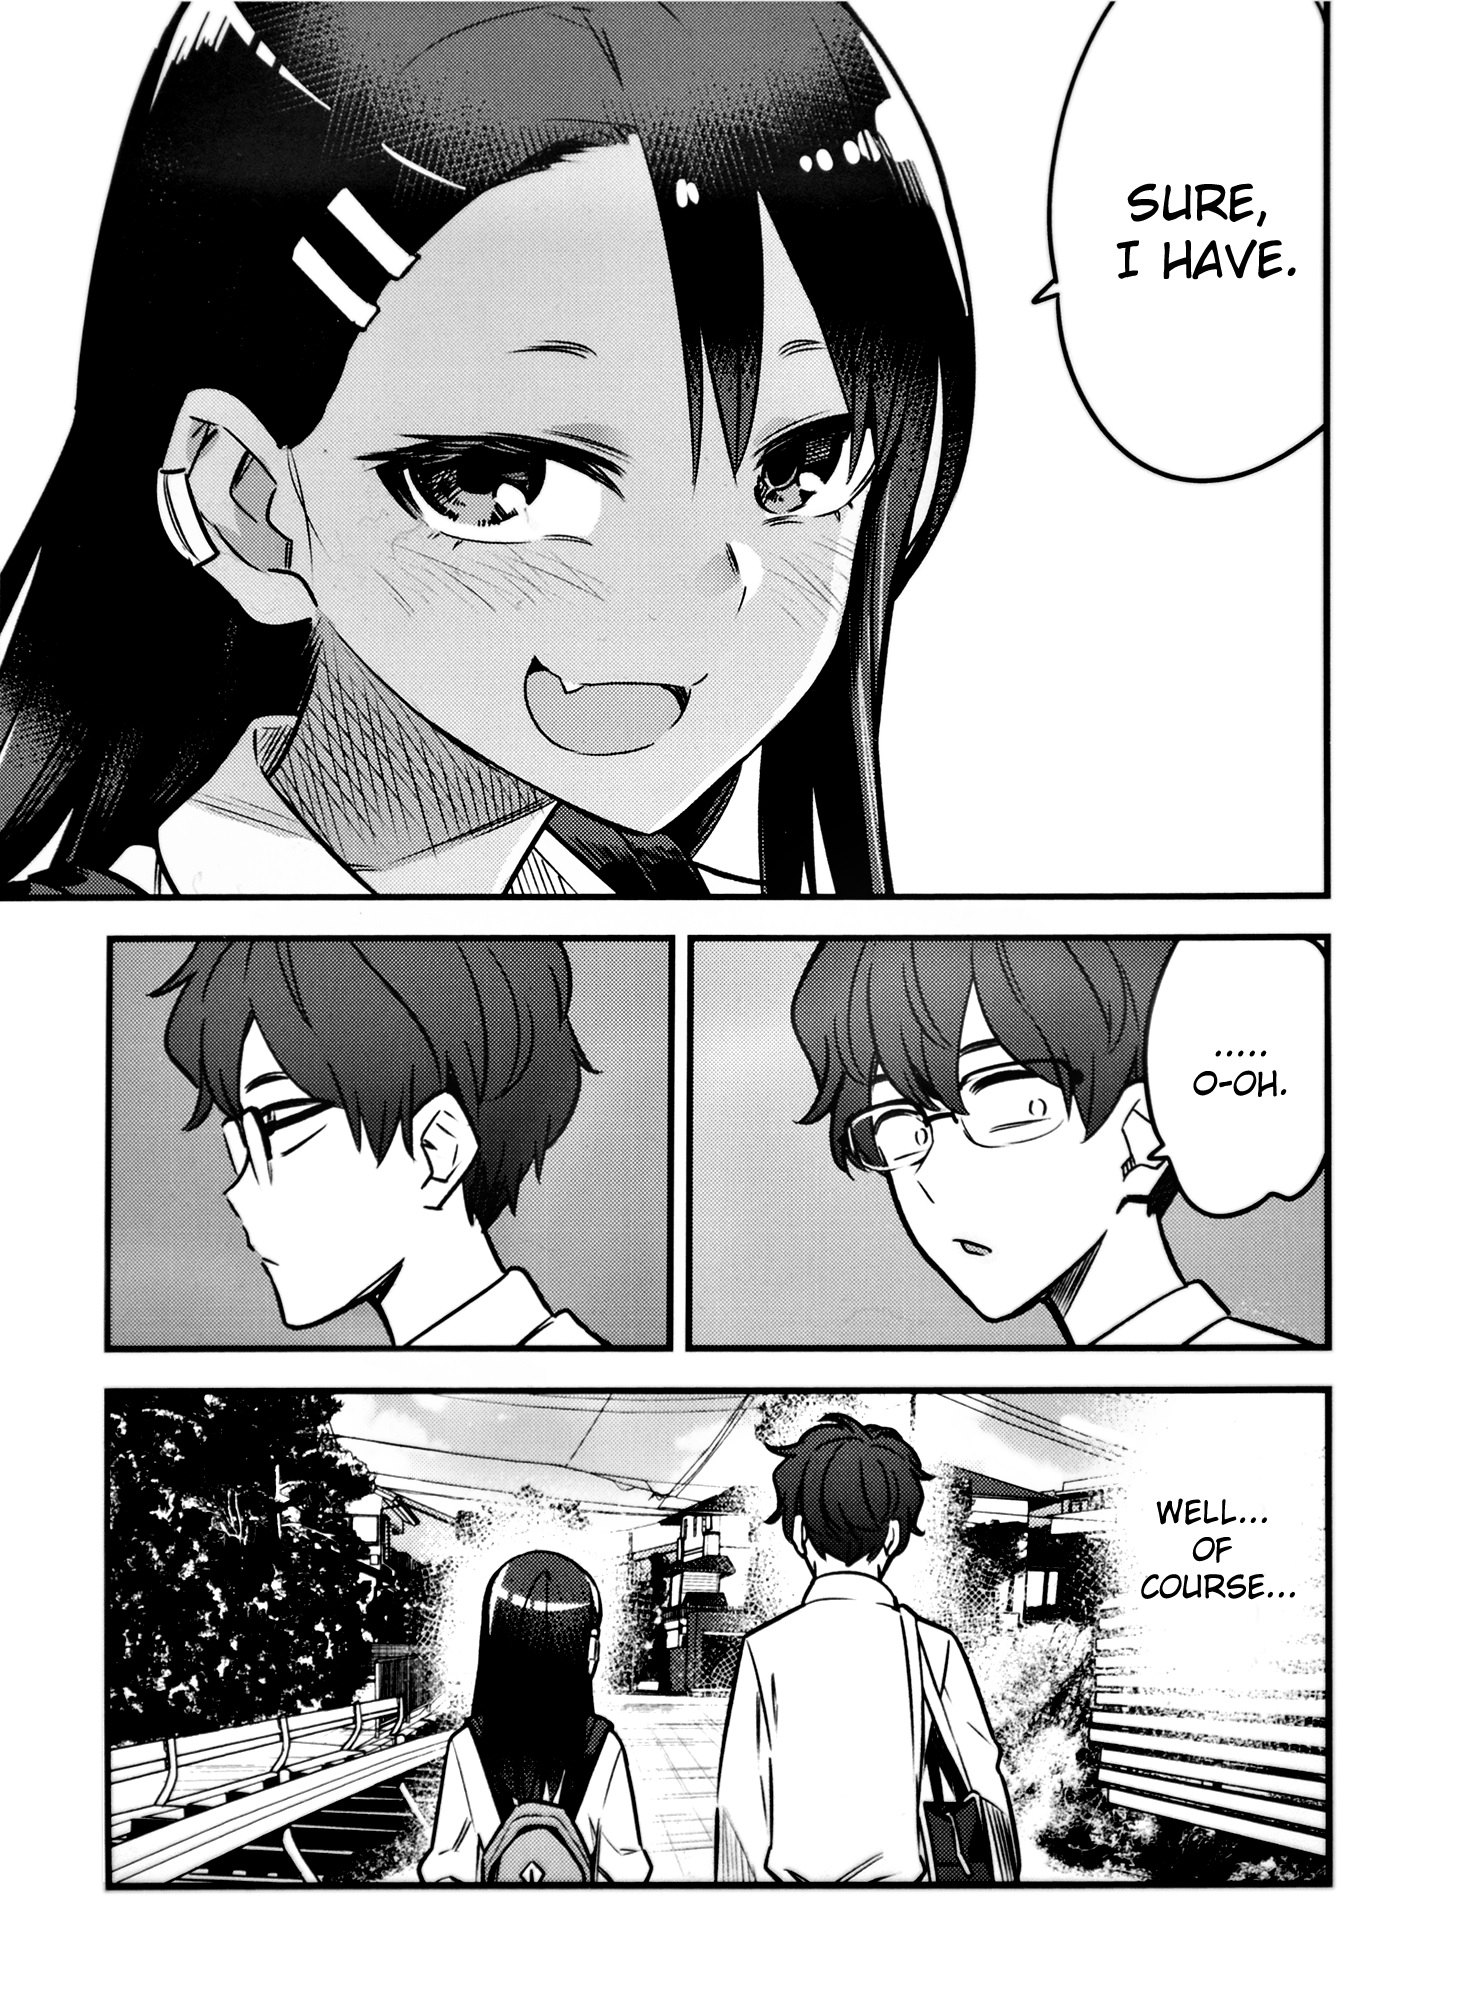 Is Nagatoro really in love with senpai (Don't Toy with Me, Miss Nagatoro  manga/anime)? - Quora